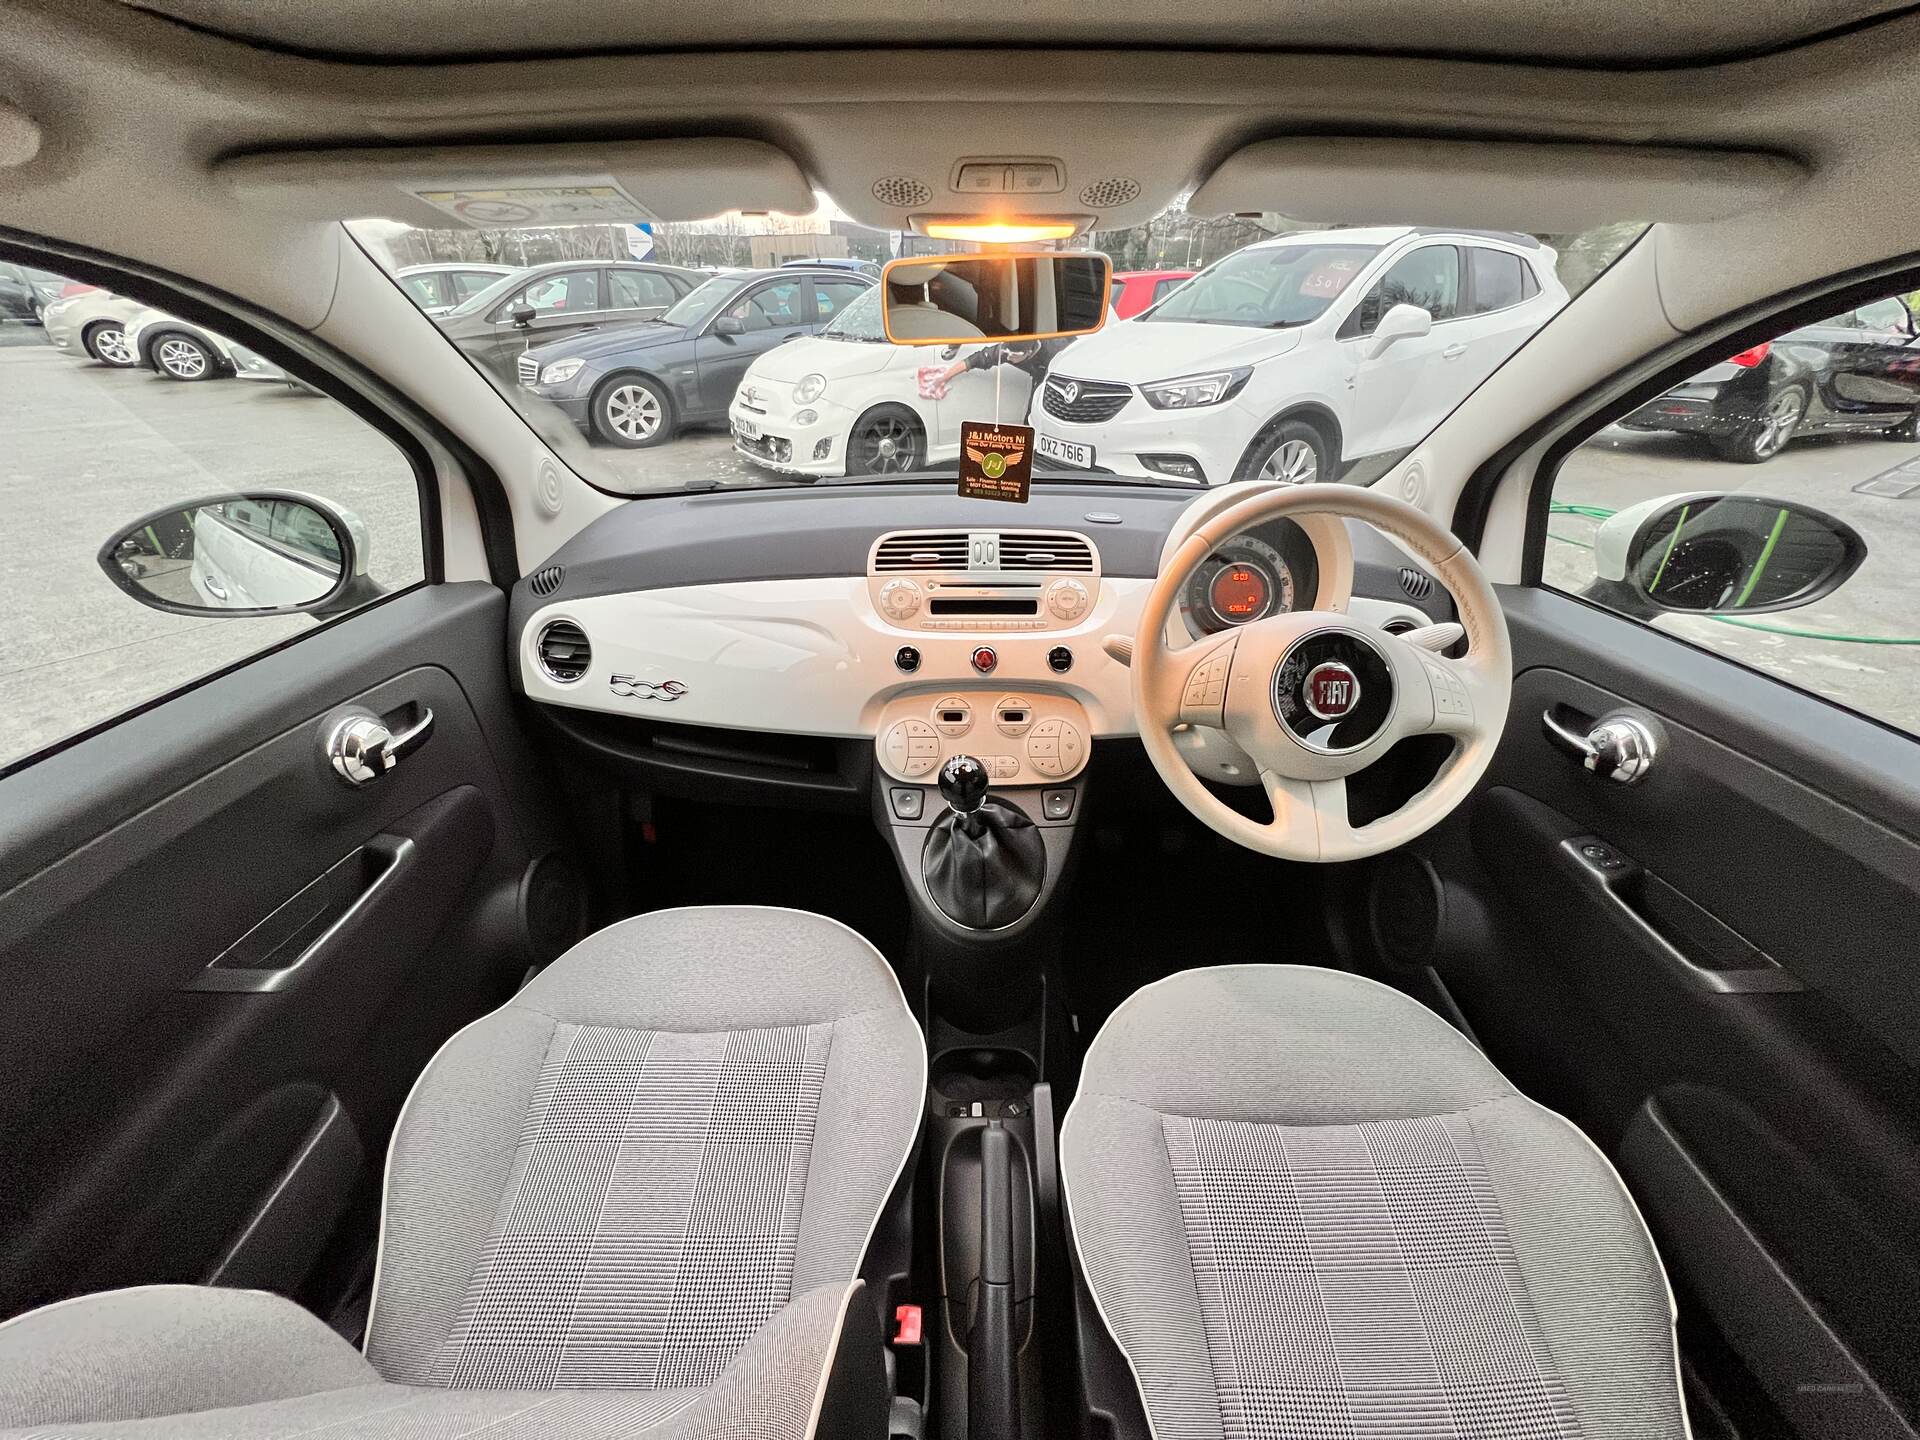 2015 Fiat 500 1.2 Lounge, Review, London Evening Standard